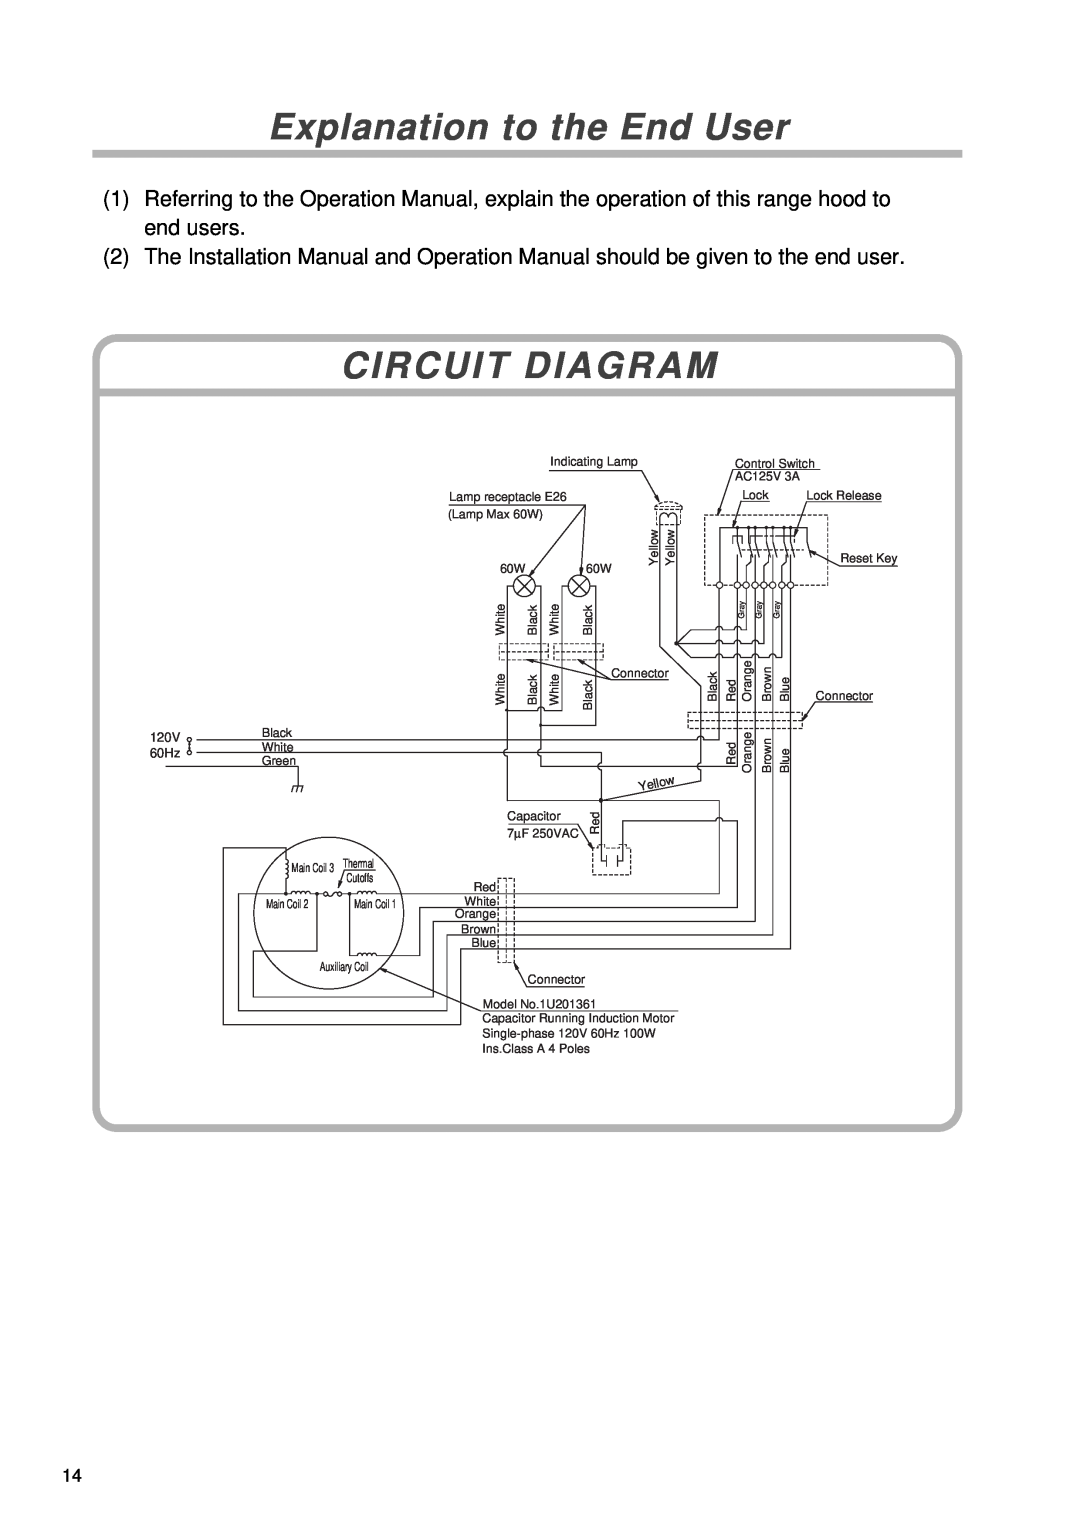 Fujioh FSR-3000 installation manual Explanation to the End User, Circuit Diagram, 120V, 60Hz 